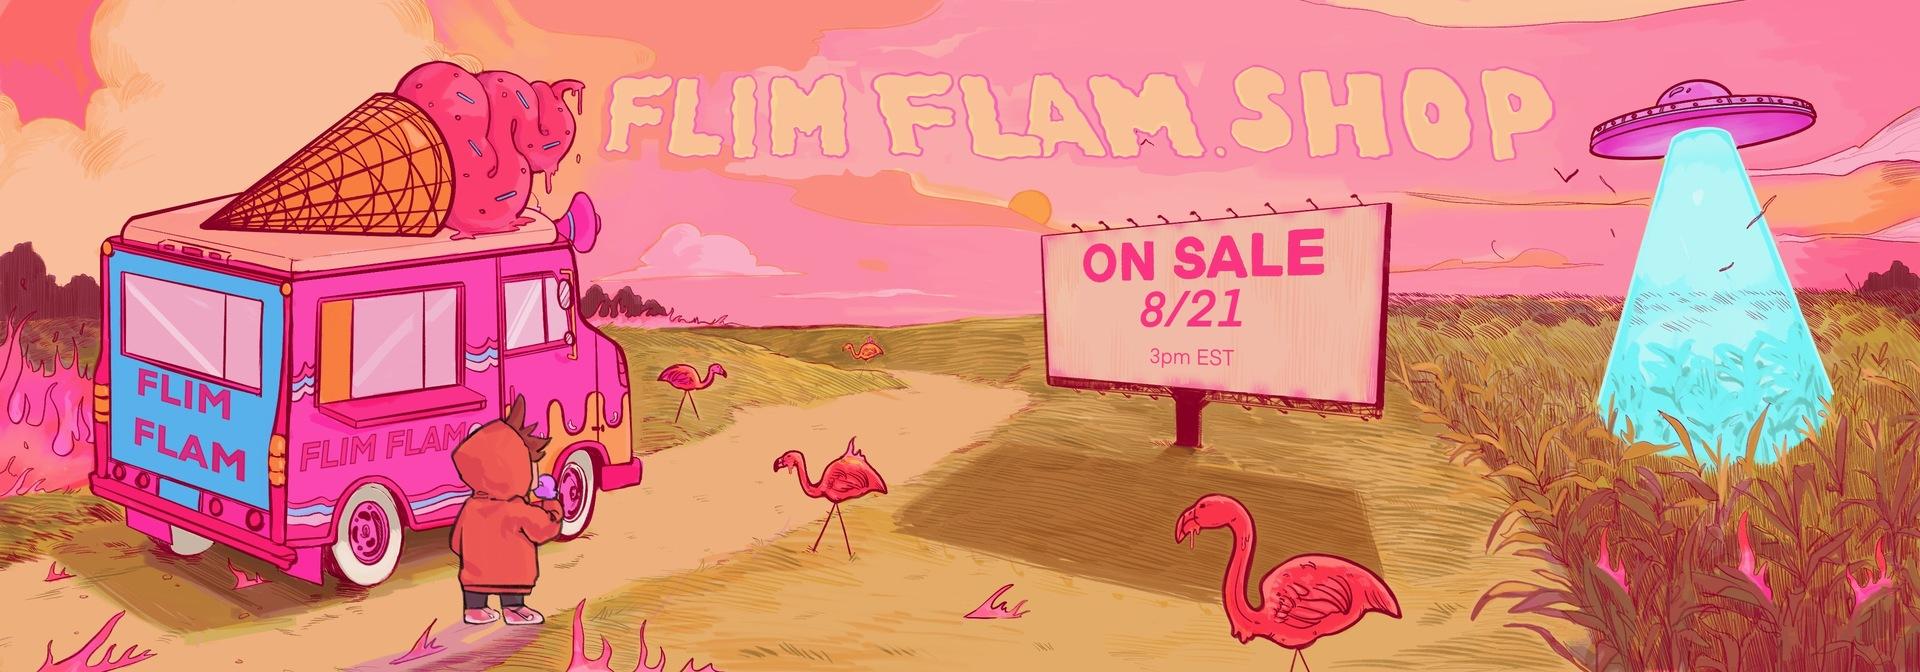 Flamingo - cleetus toy stand roblox